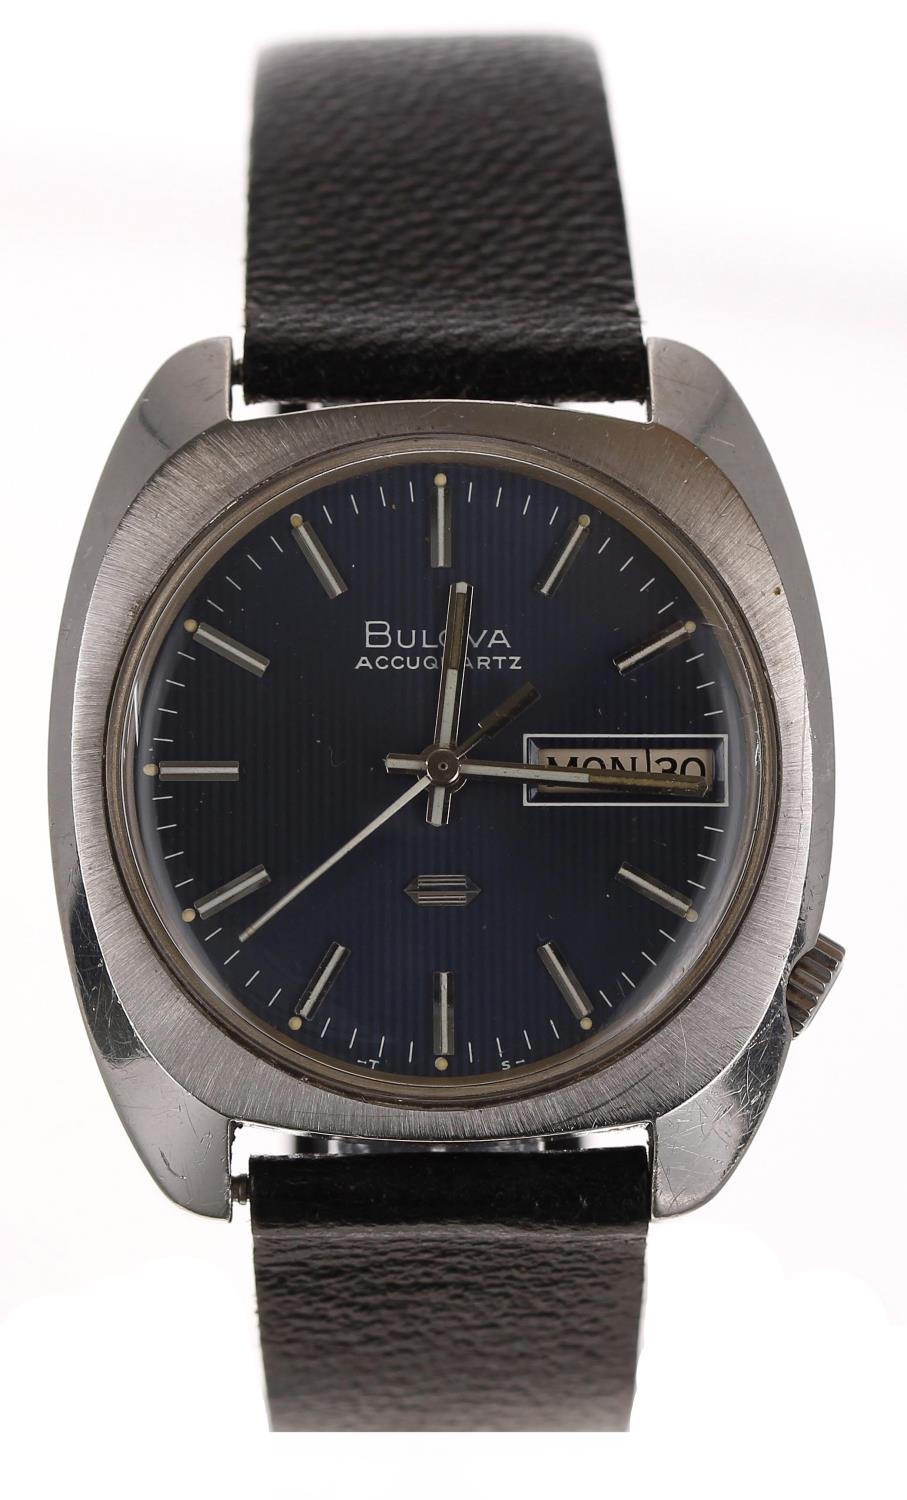 Bulova Accuquartz stainless steel gentleman's wristwatch, case no. 3-758xxx, circular blue dial with